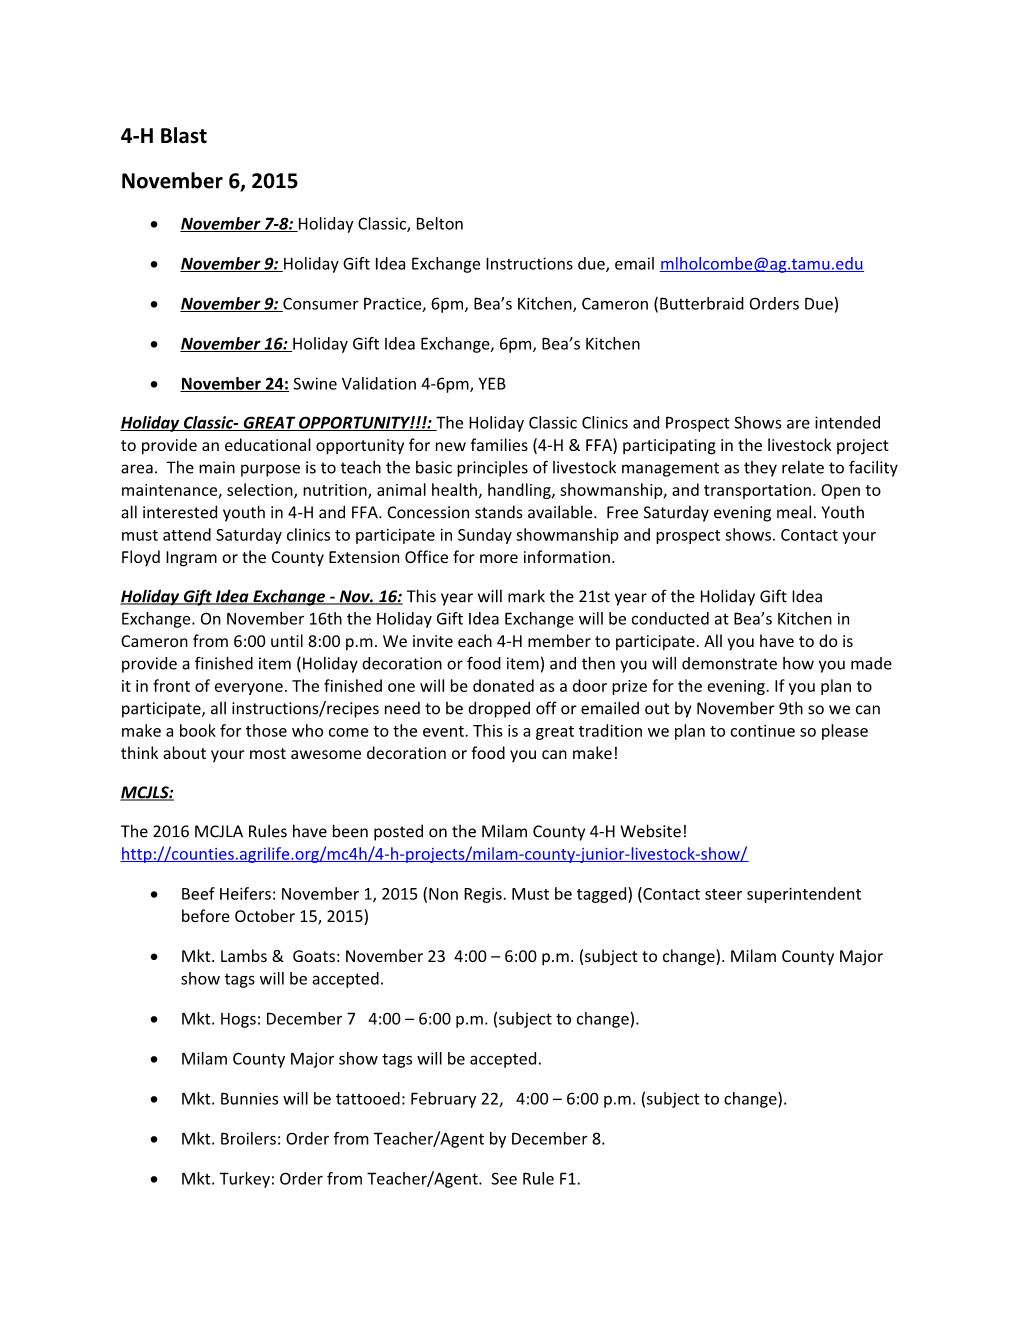 November 7-8: Holiday Classic, Belton